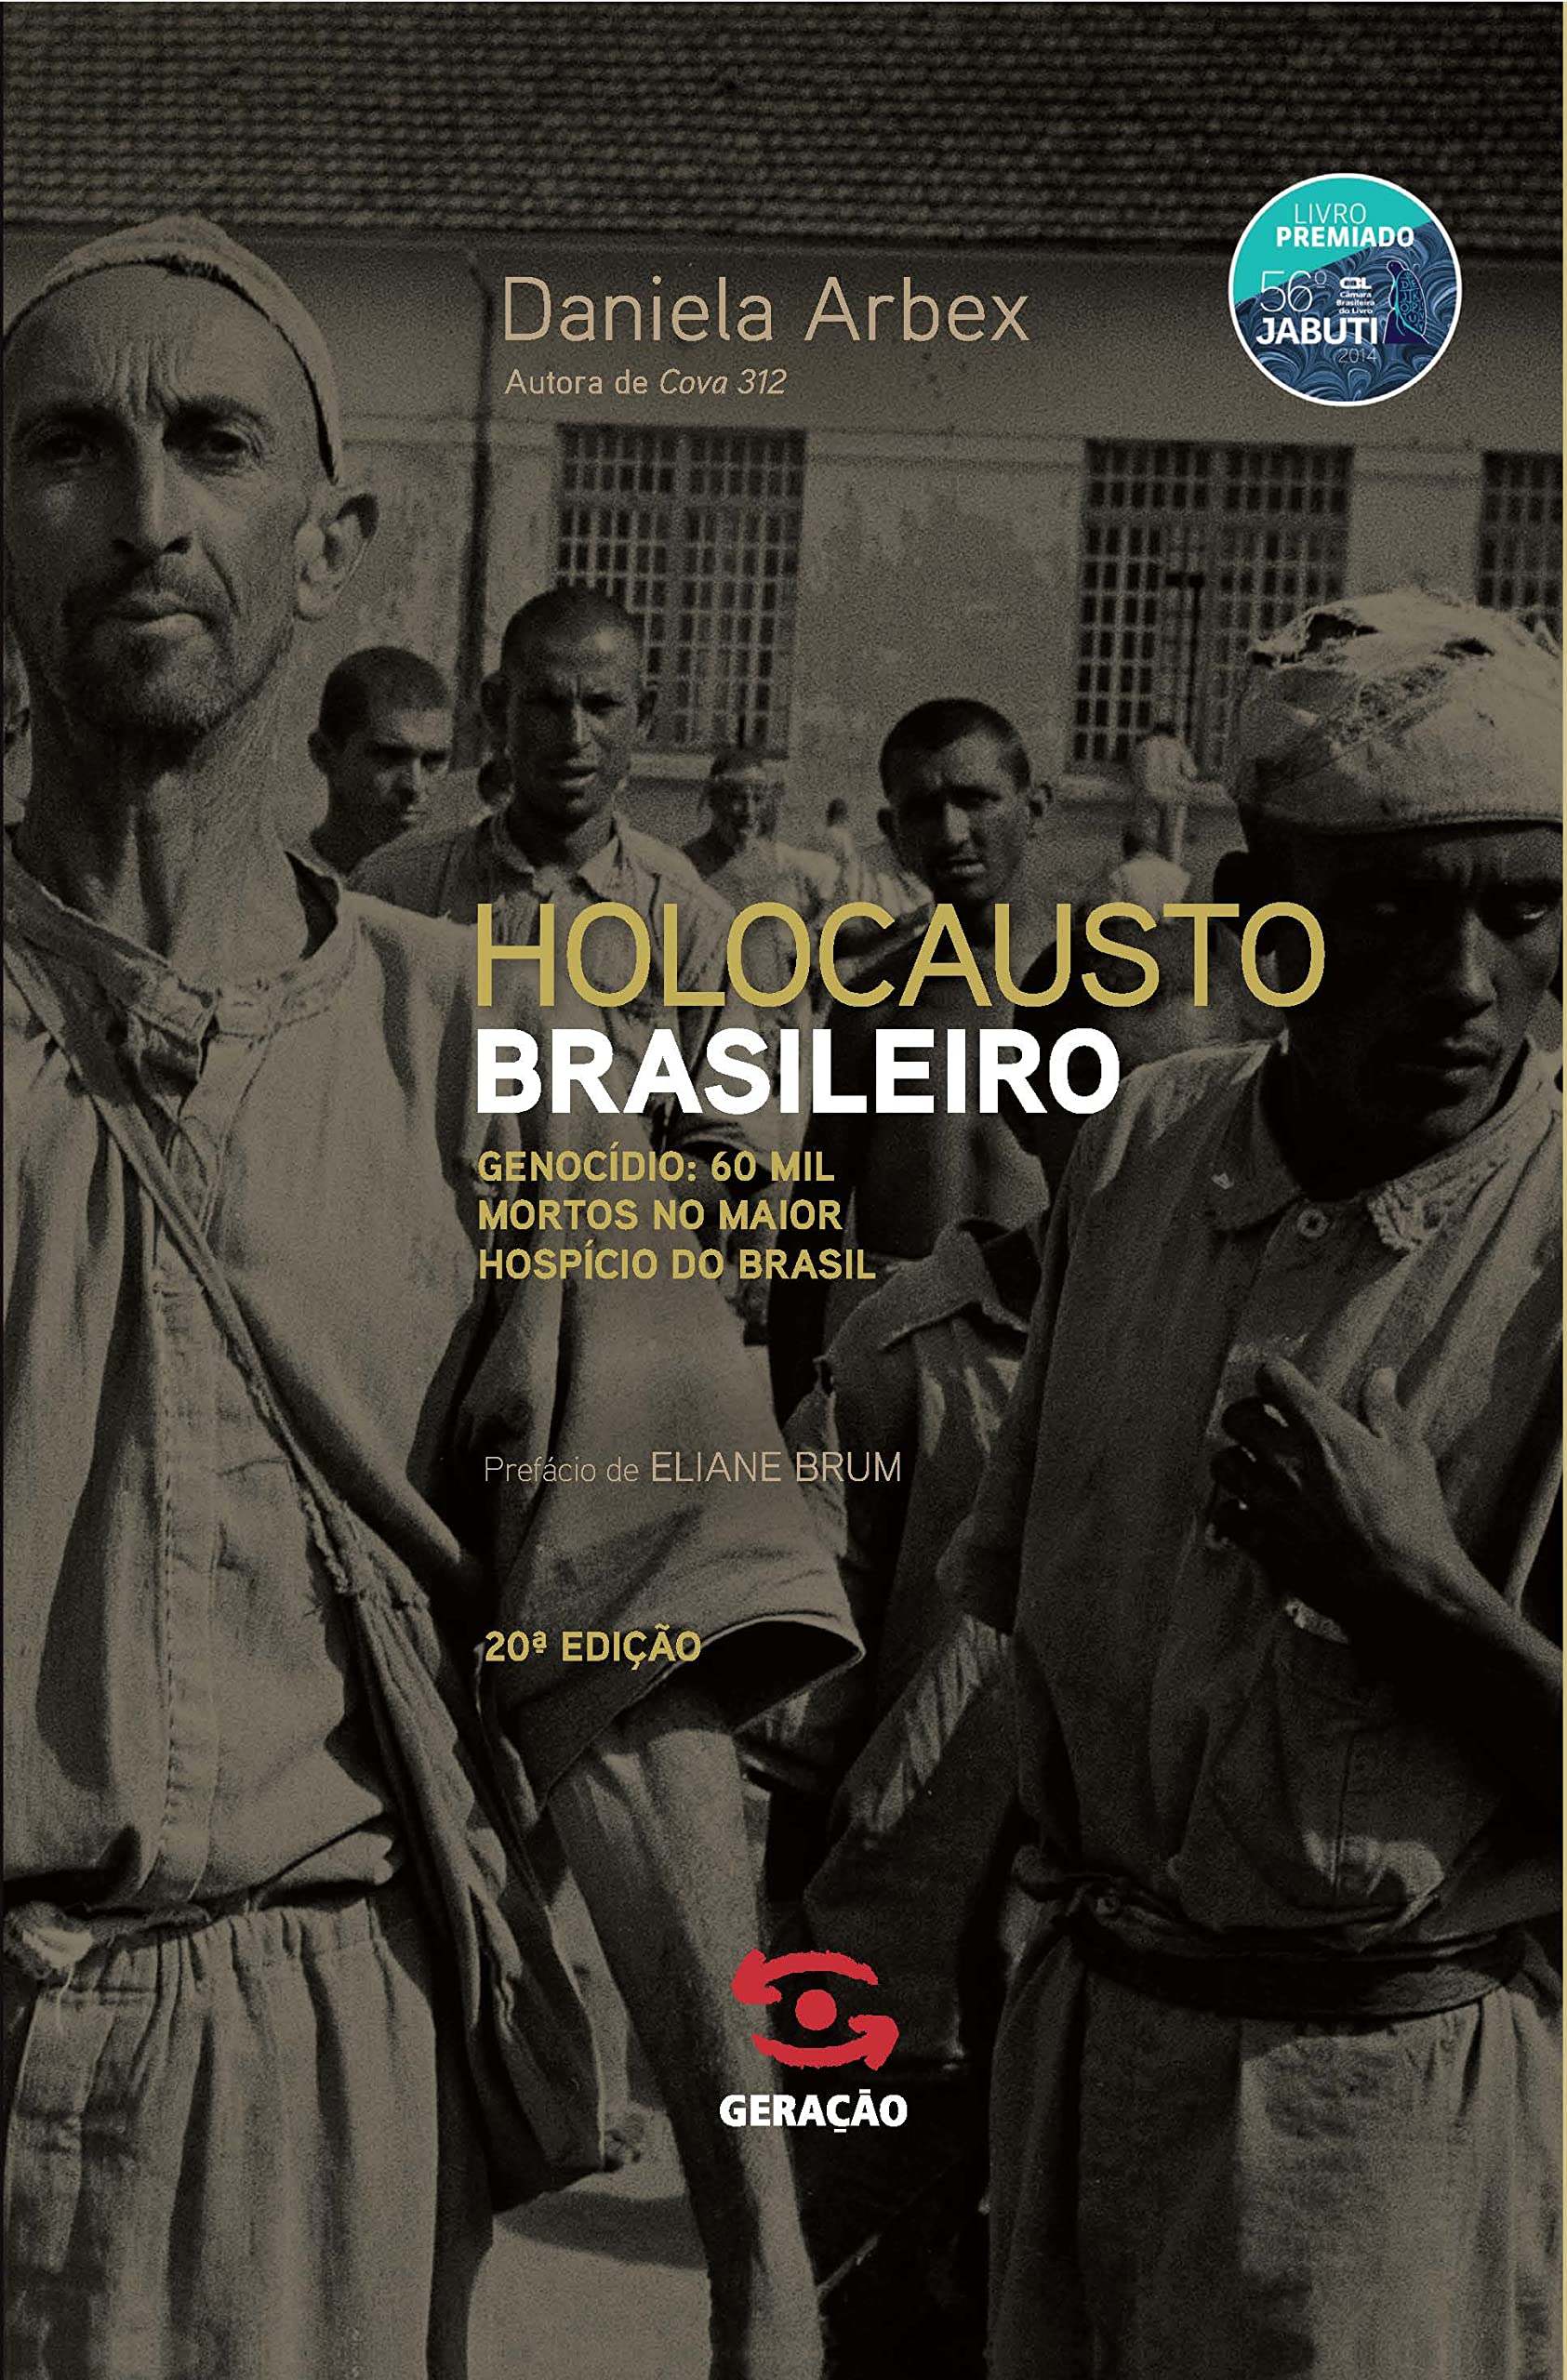 Book Holocausto Brasileiro: Genocídio - Daniela Arbex